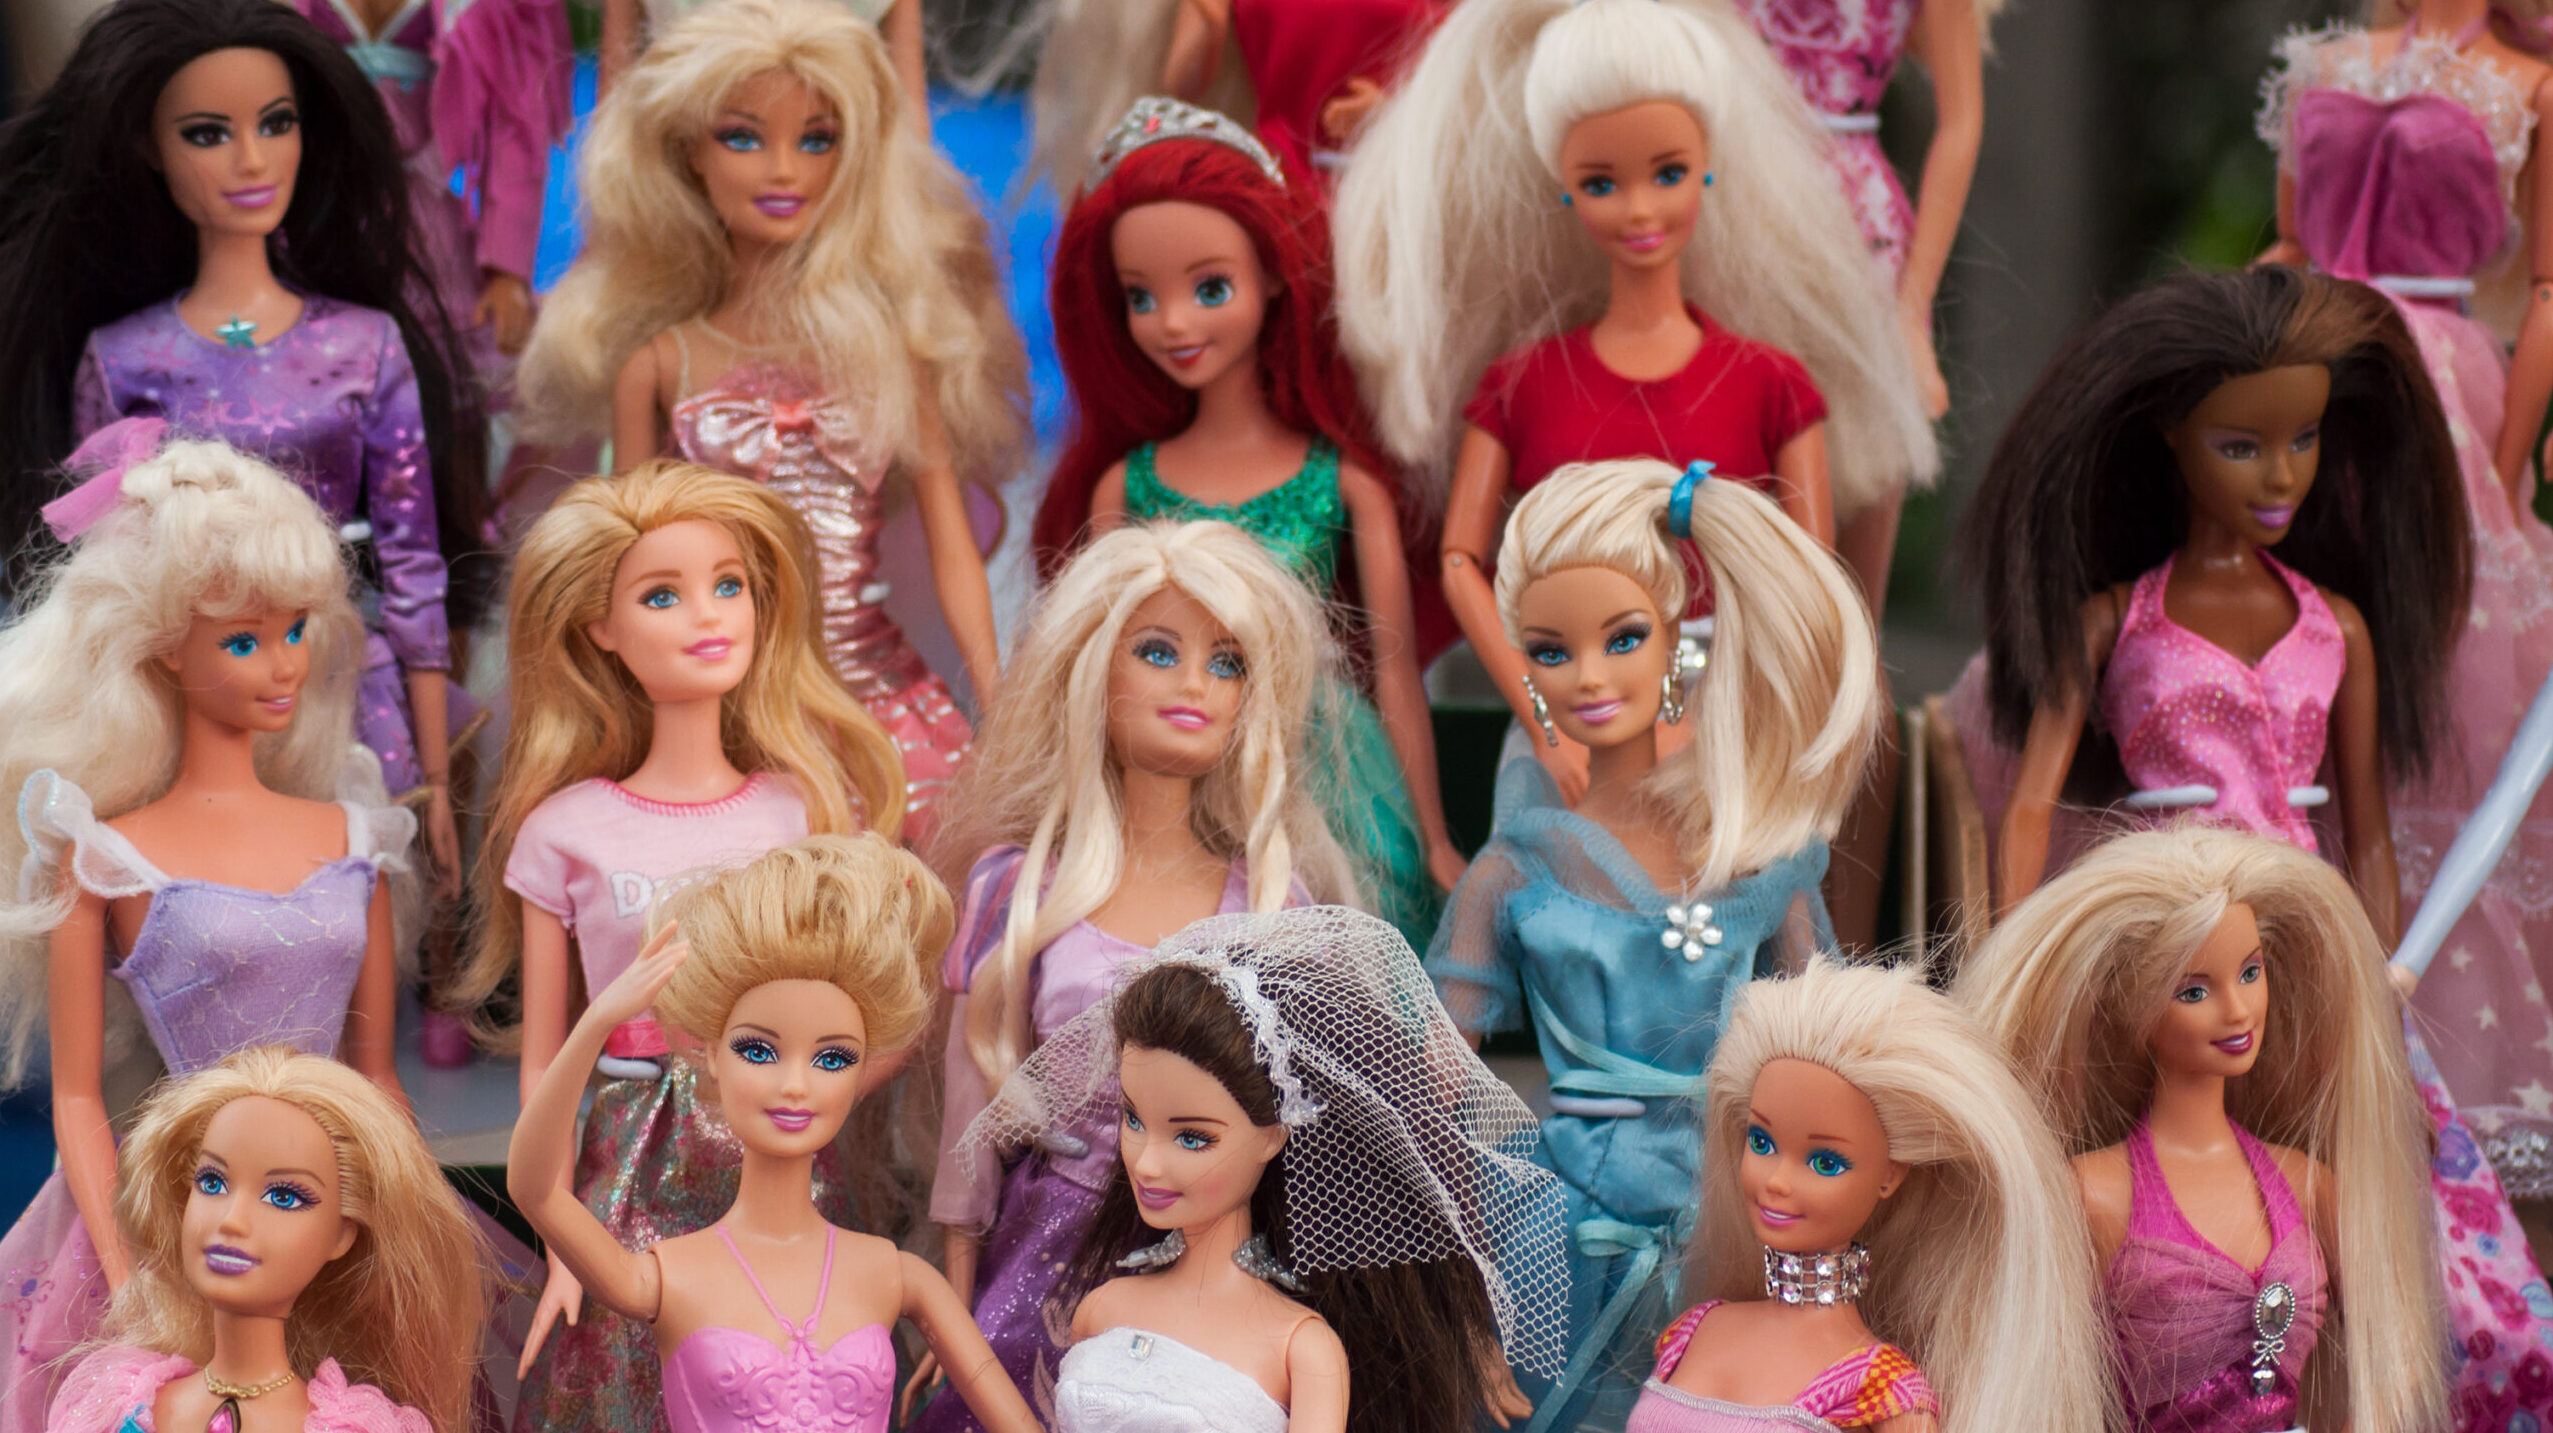 Many kinds of Barbie dolls